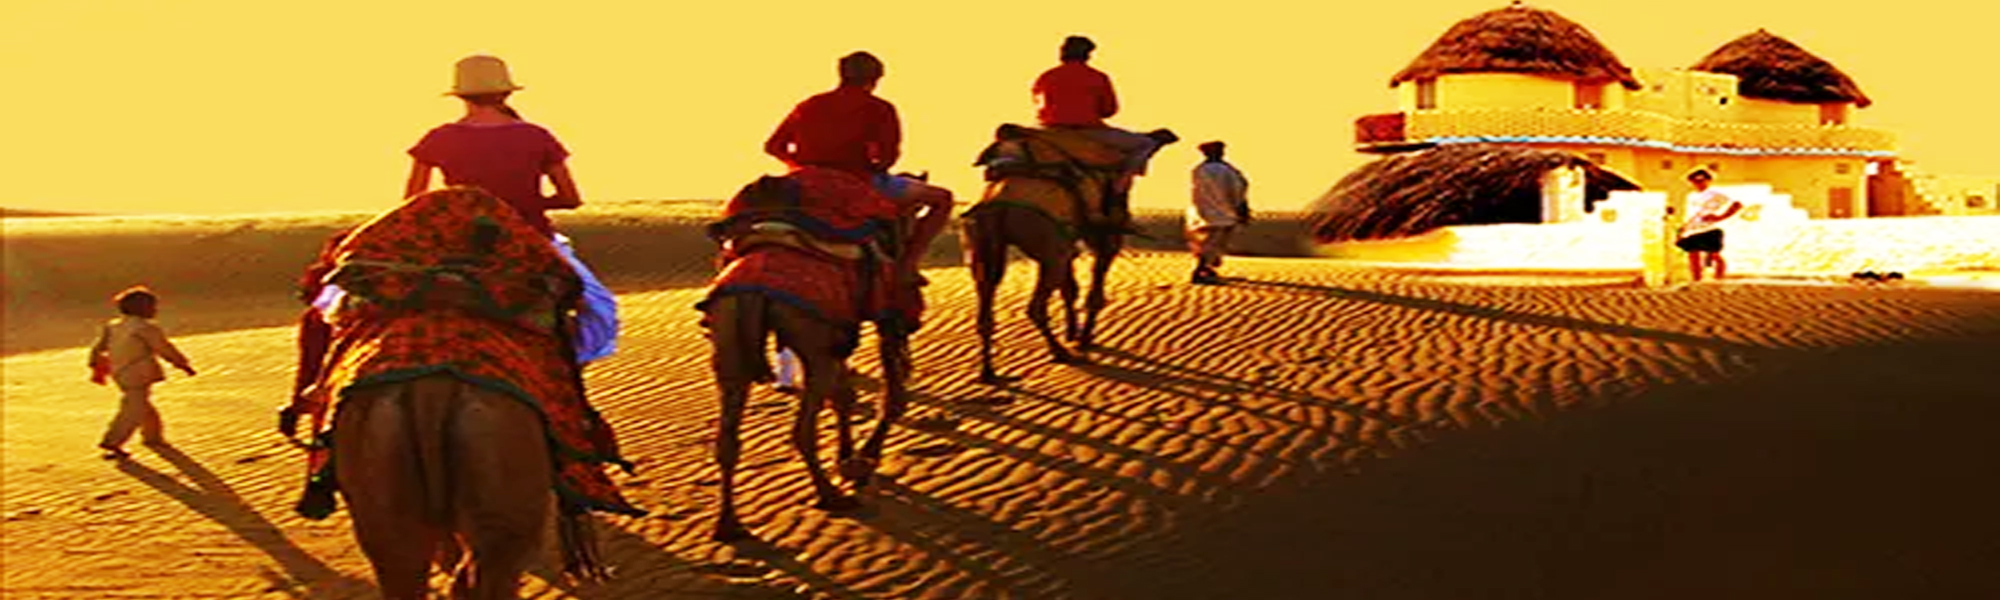 Camel Safari Budget Tours in India 